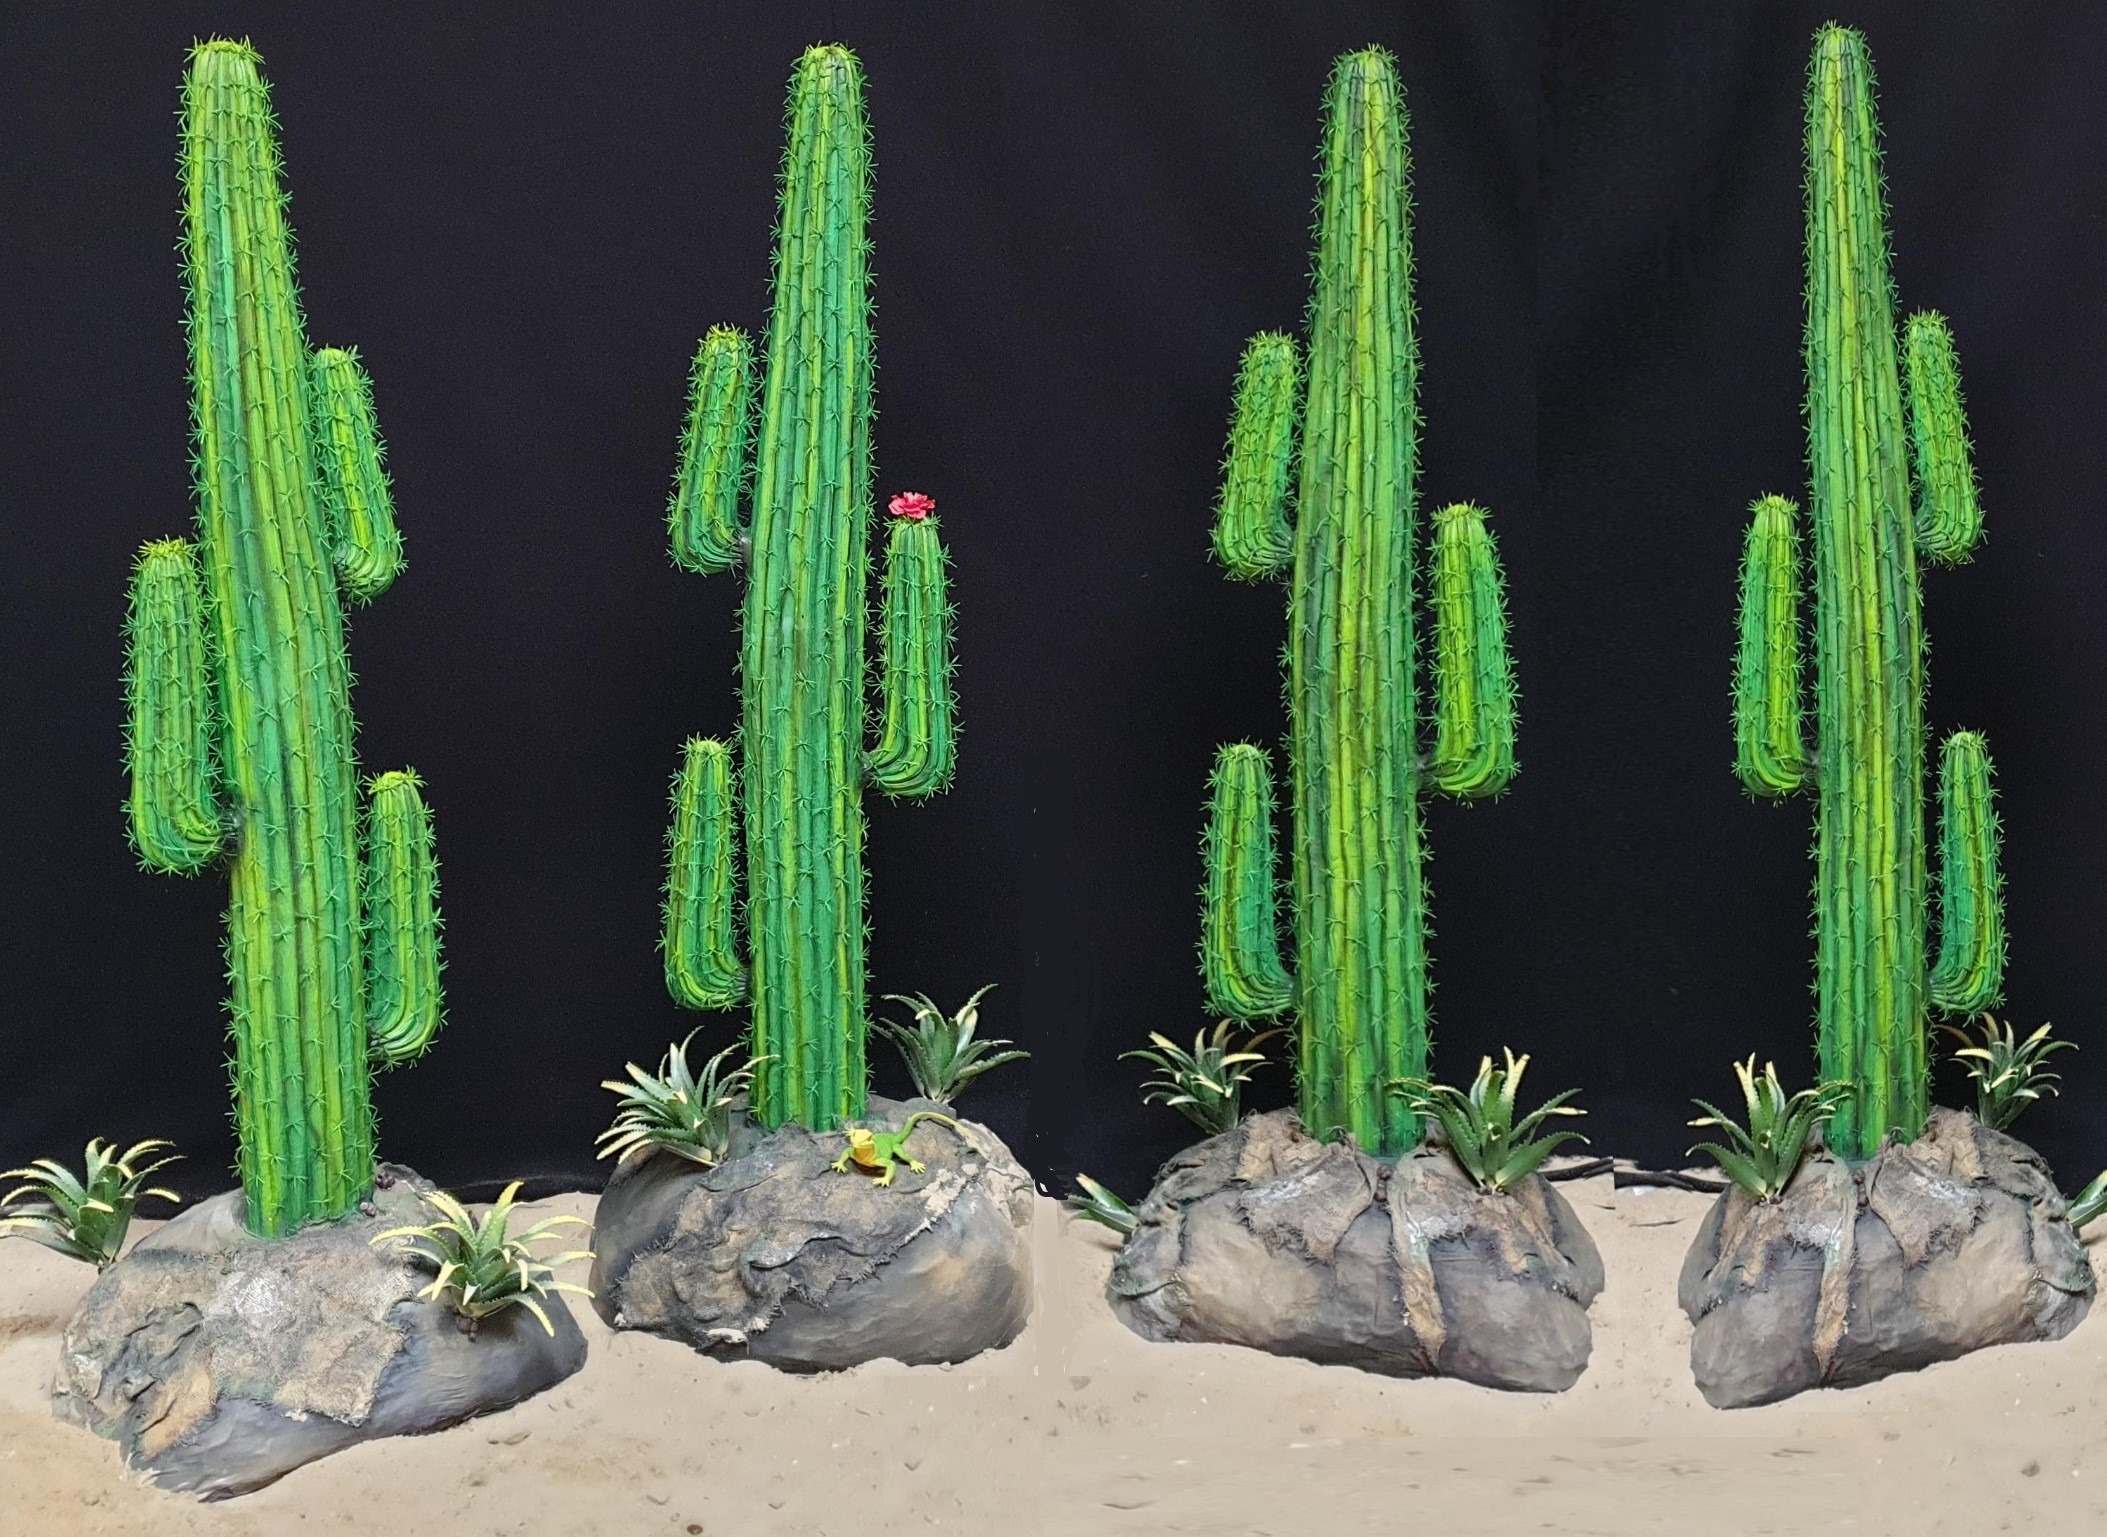 Cactussen, Cactus, decor, decorstuk, decoratie, huren, te huur